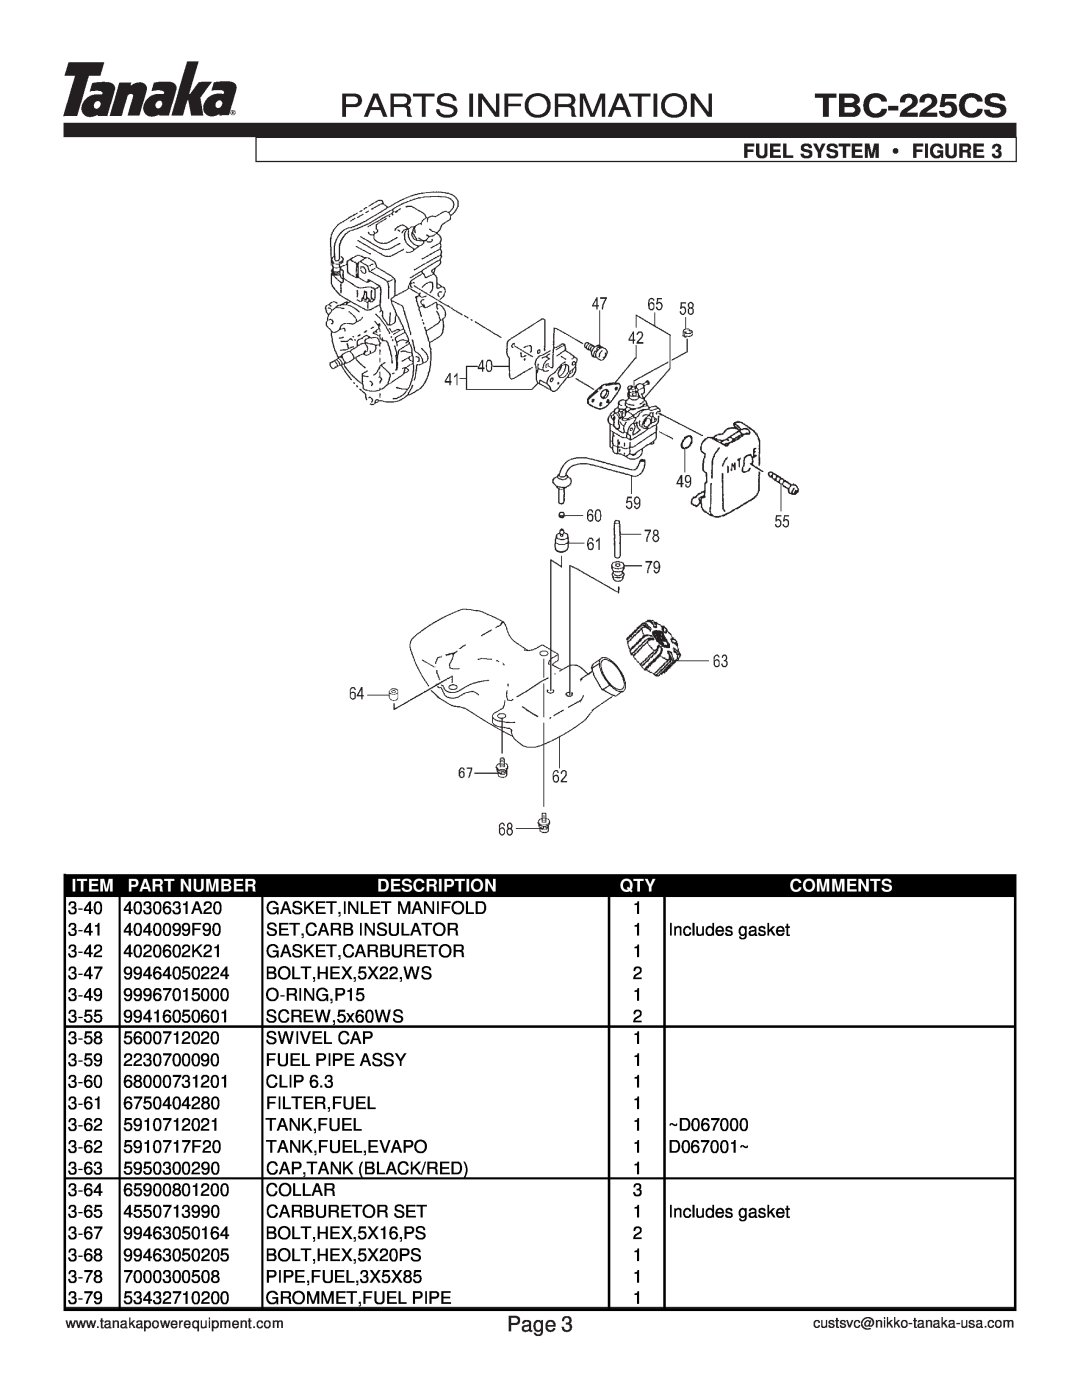 Tanaka TBC-225CS manual Parts Information, Fuel System Figure, Page, Part Number, Description, Comments 